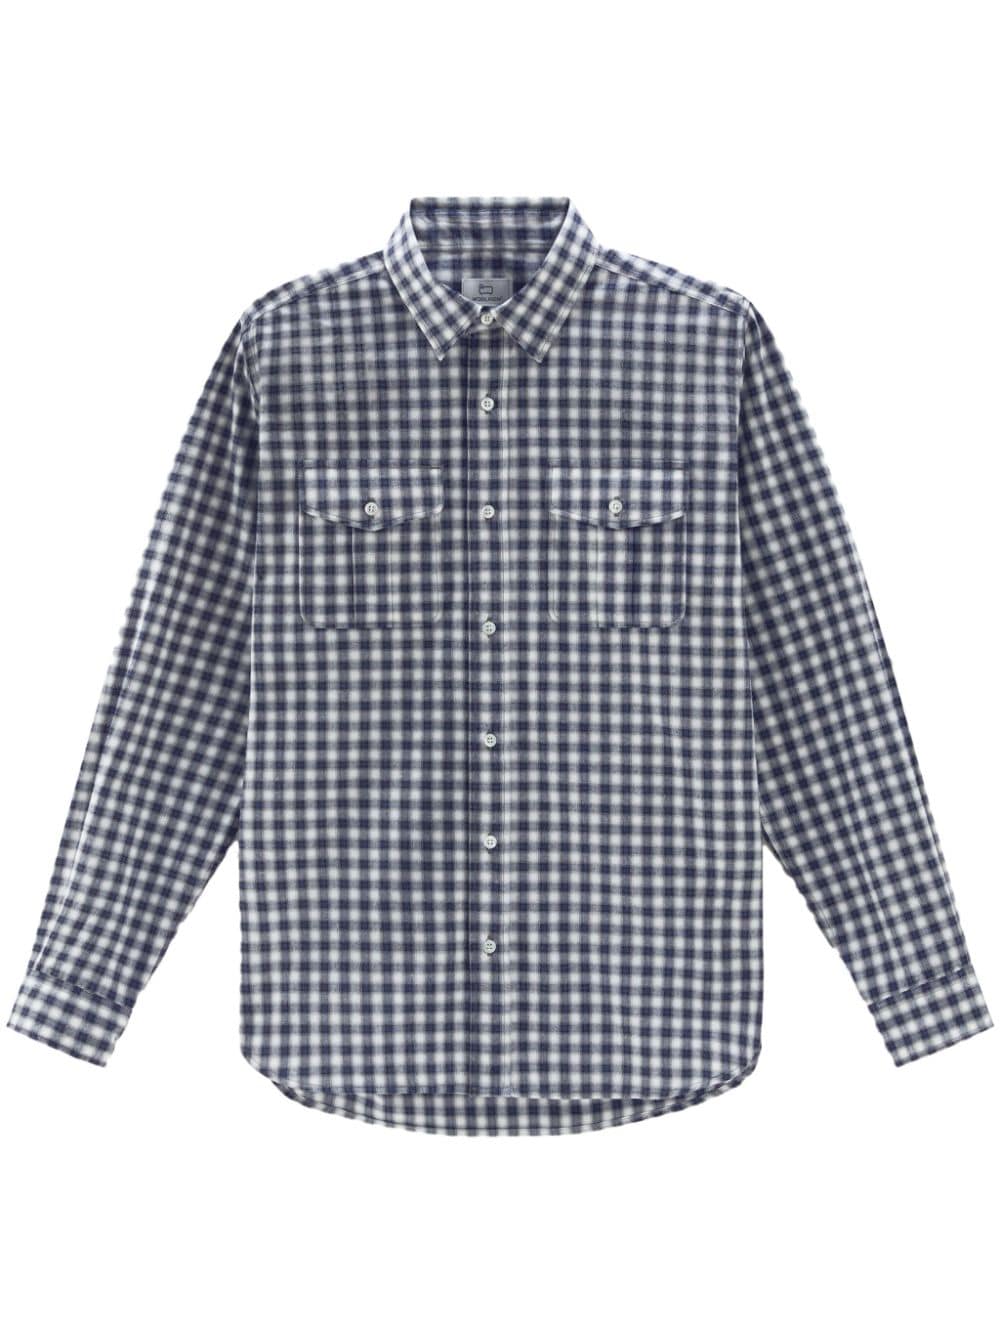 Woolrich checked linen shirt - Blue von Woolrich